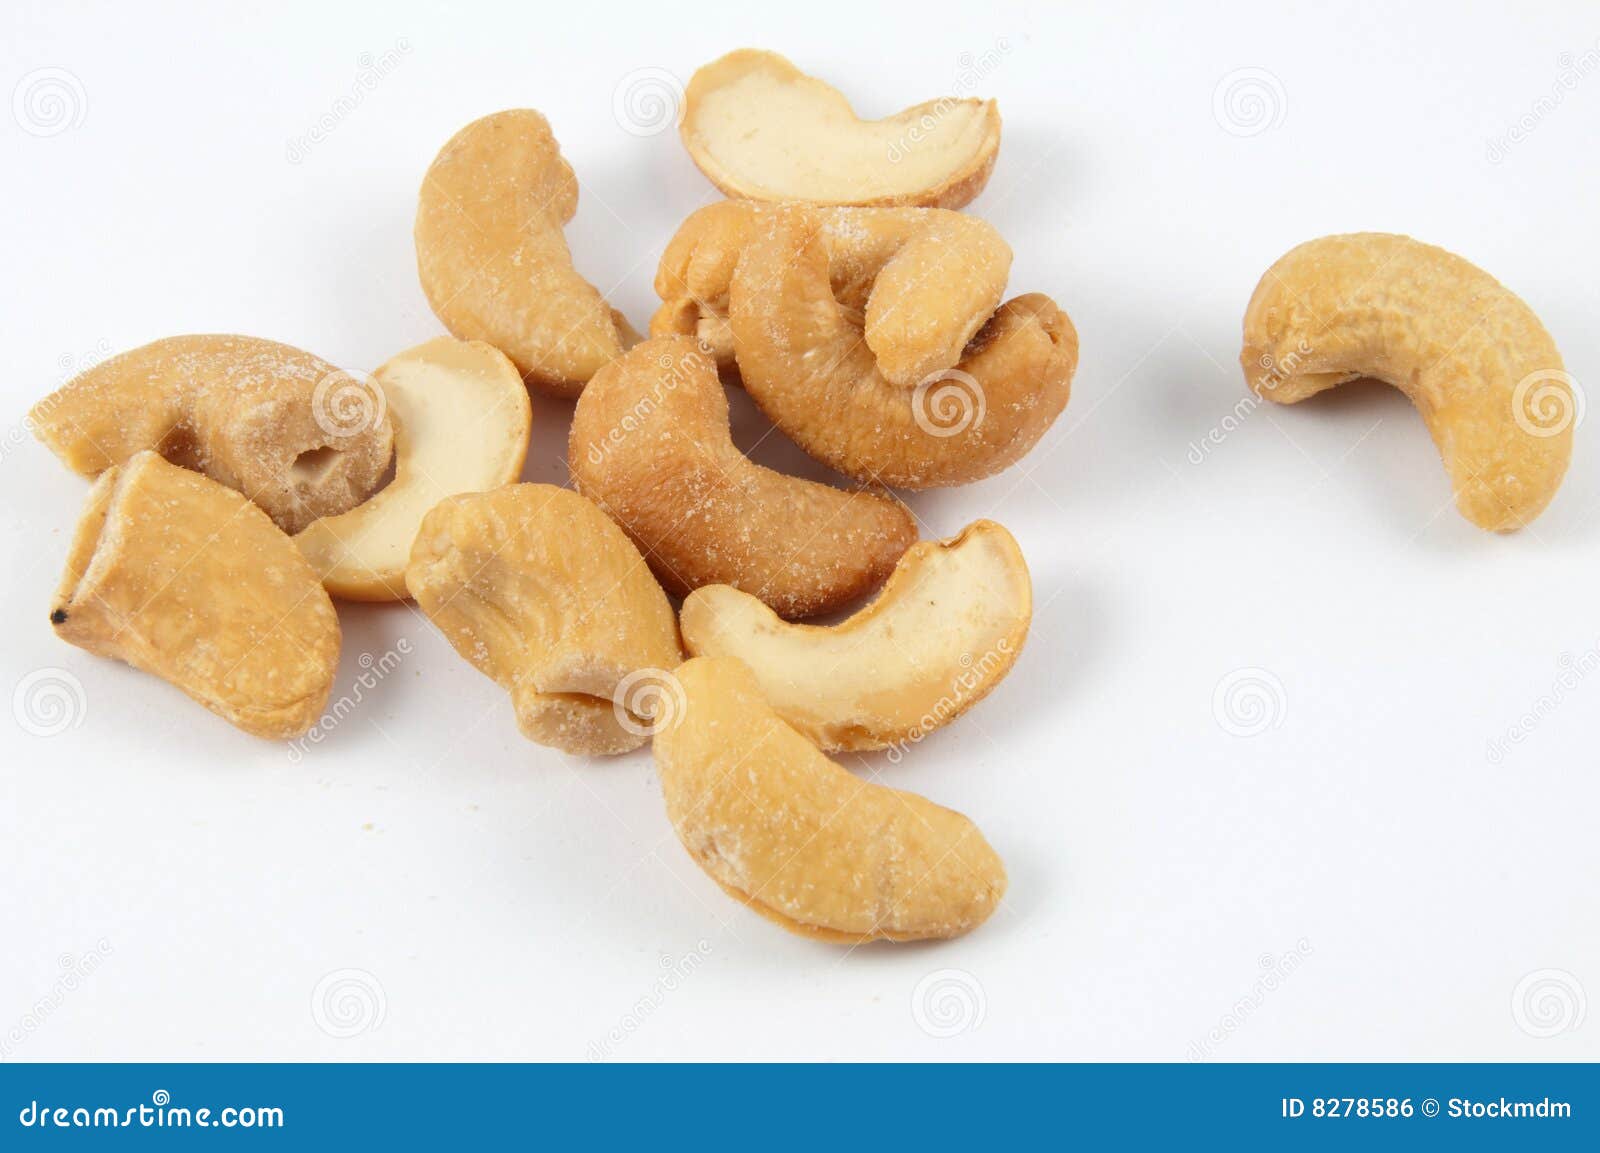 pile of cashews